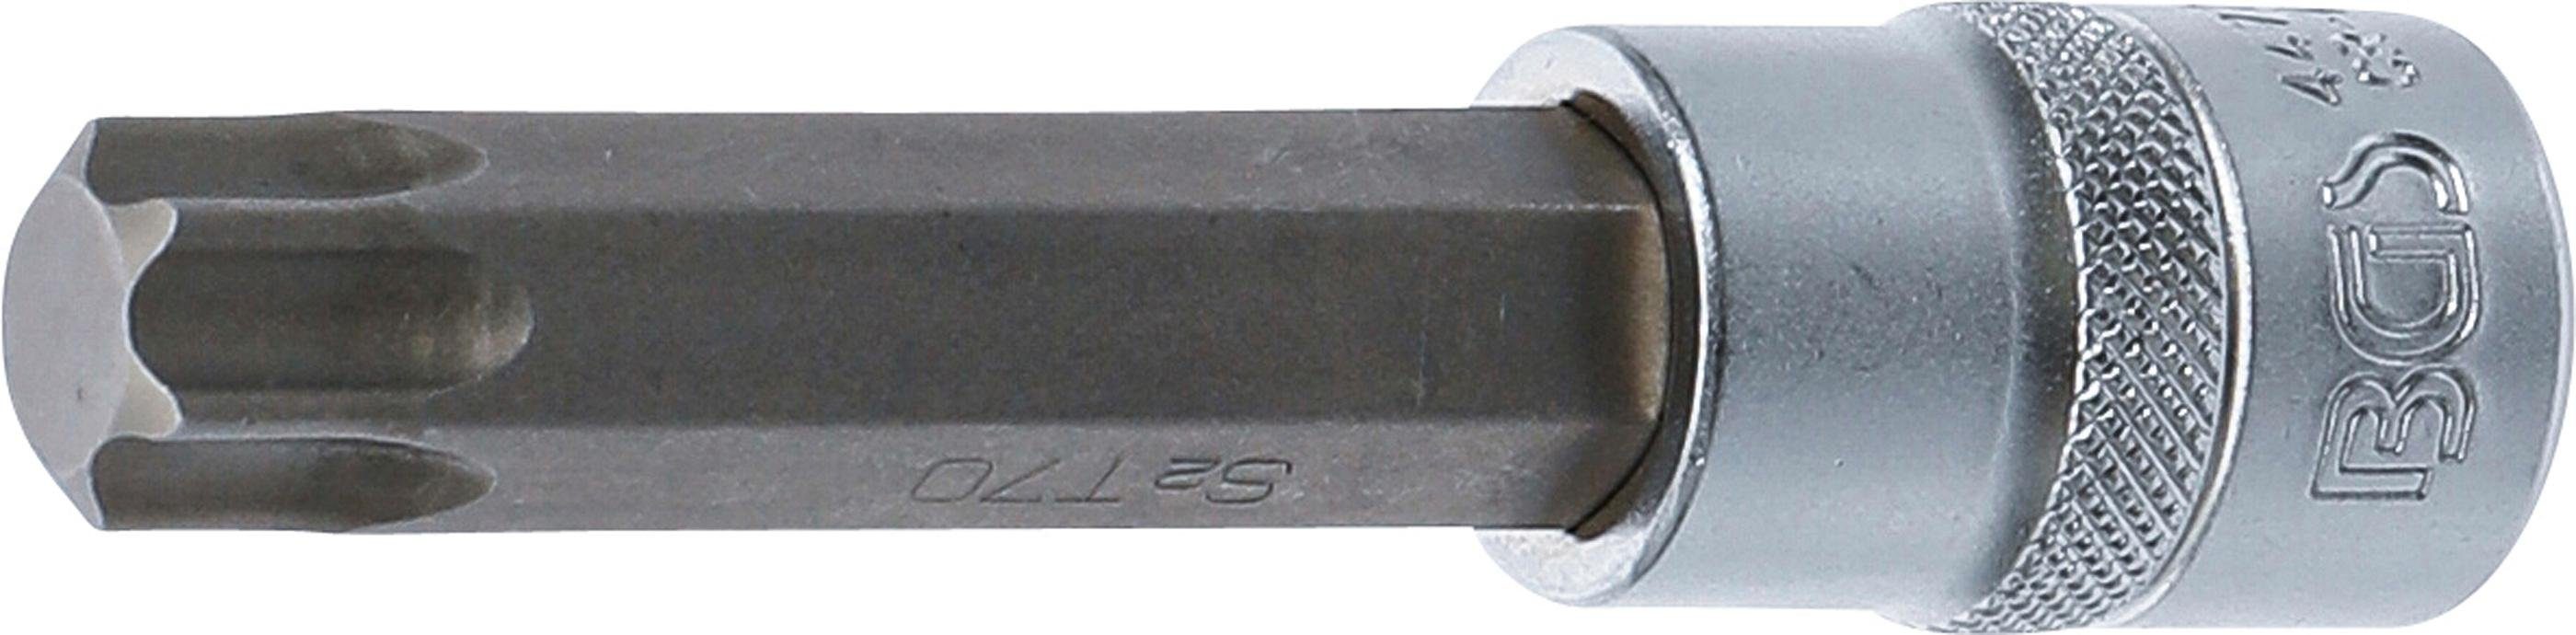 BGS technic Bit-Schraubendreher Bit-Einsatz, Länge 100 mm, Antrieb Innenvierkant 12,5 mm (1/2), T-Profil (für Torx) T70